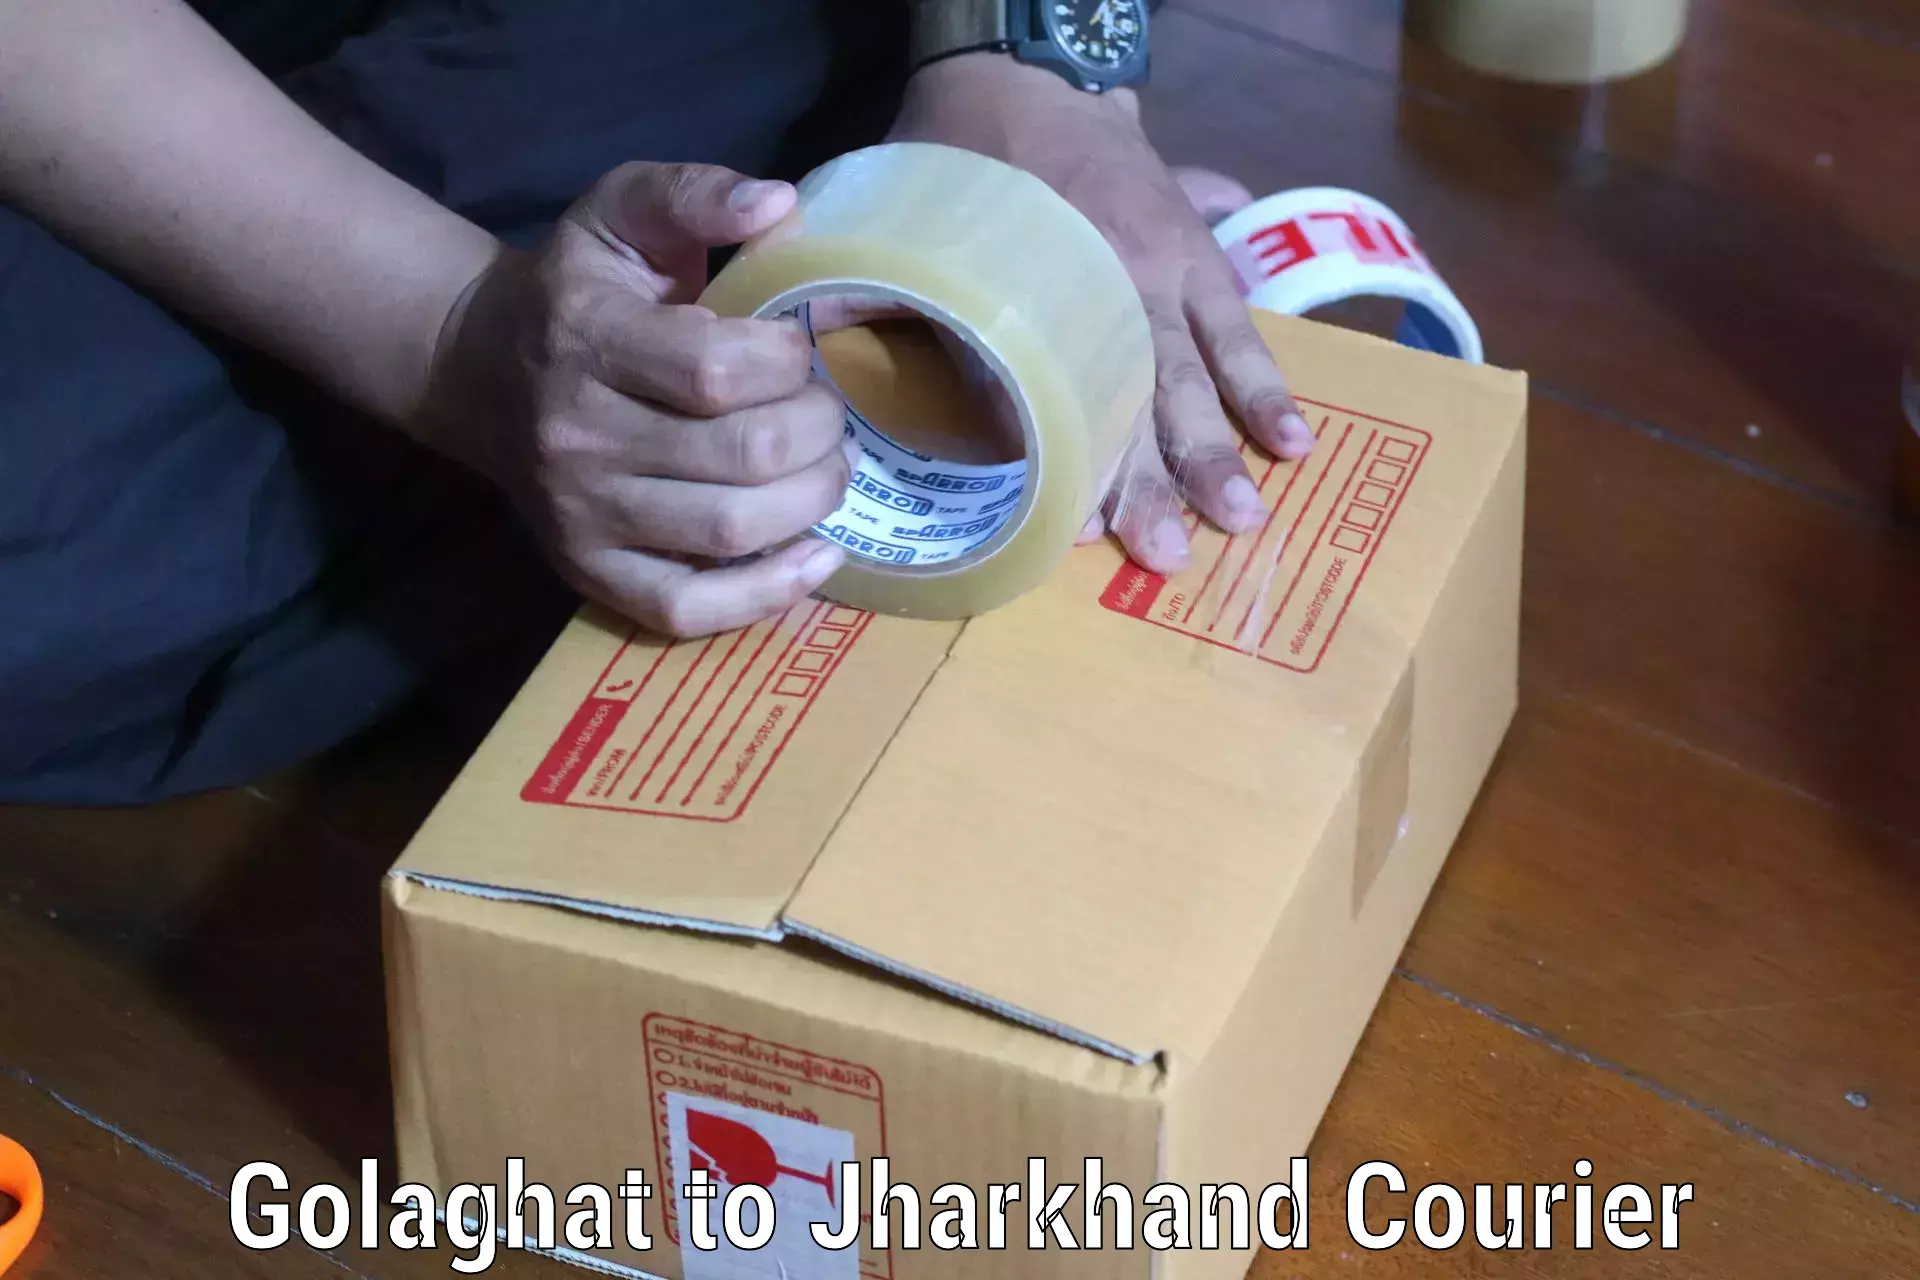 Doorstep delivery service Golaghat to Rangalia